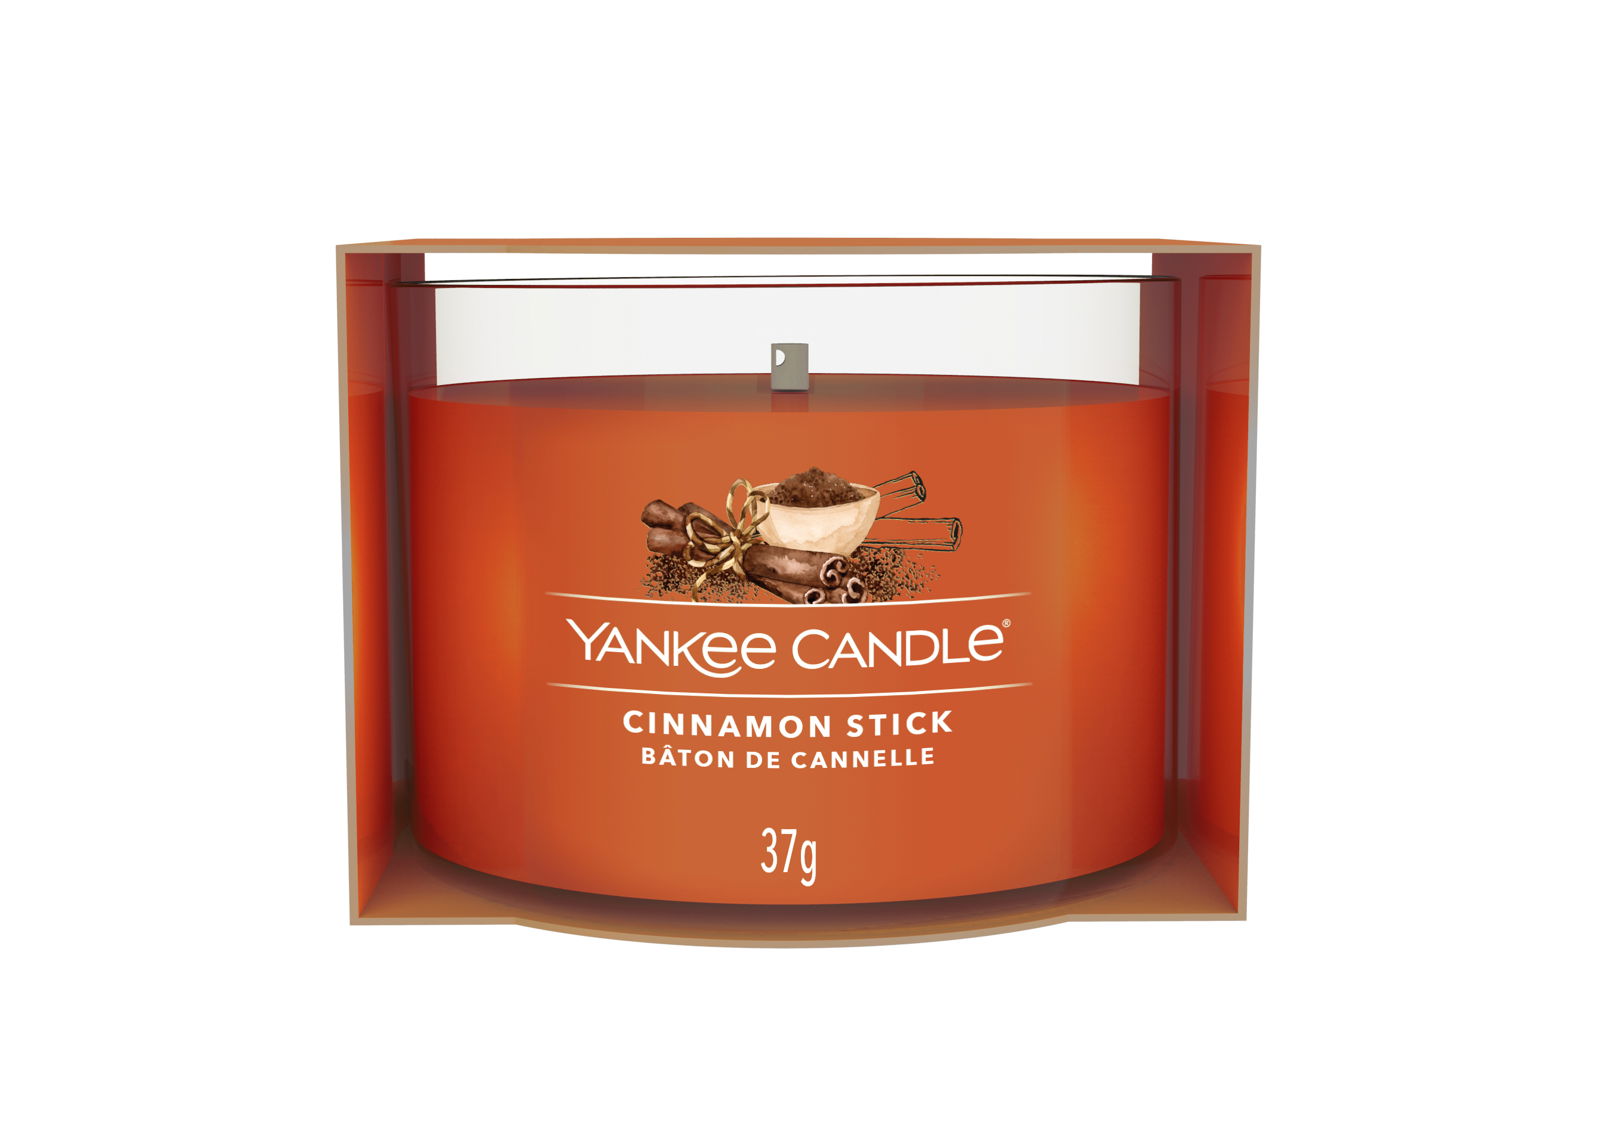 Cinnamon Stick 37g